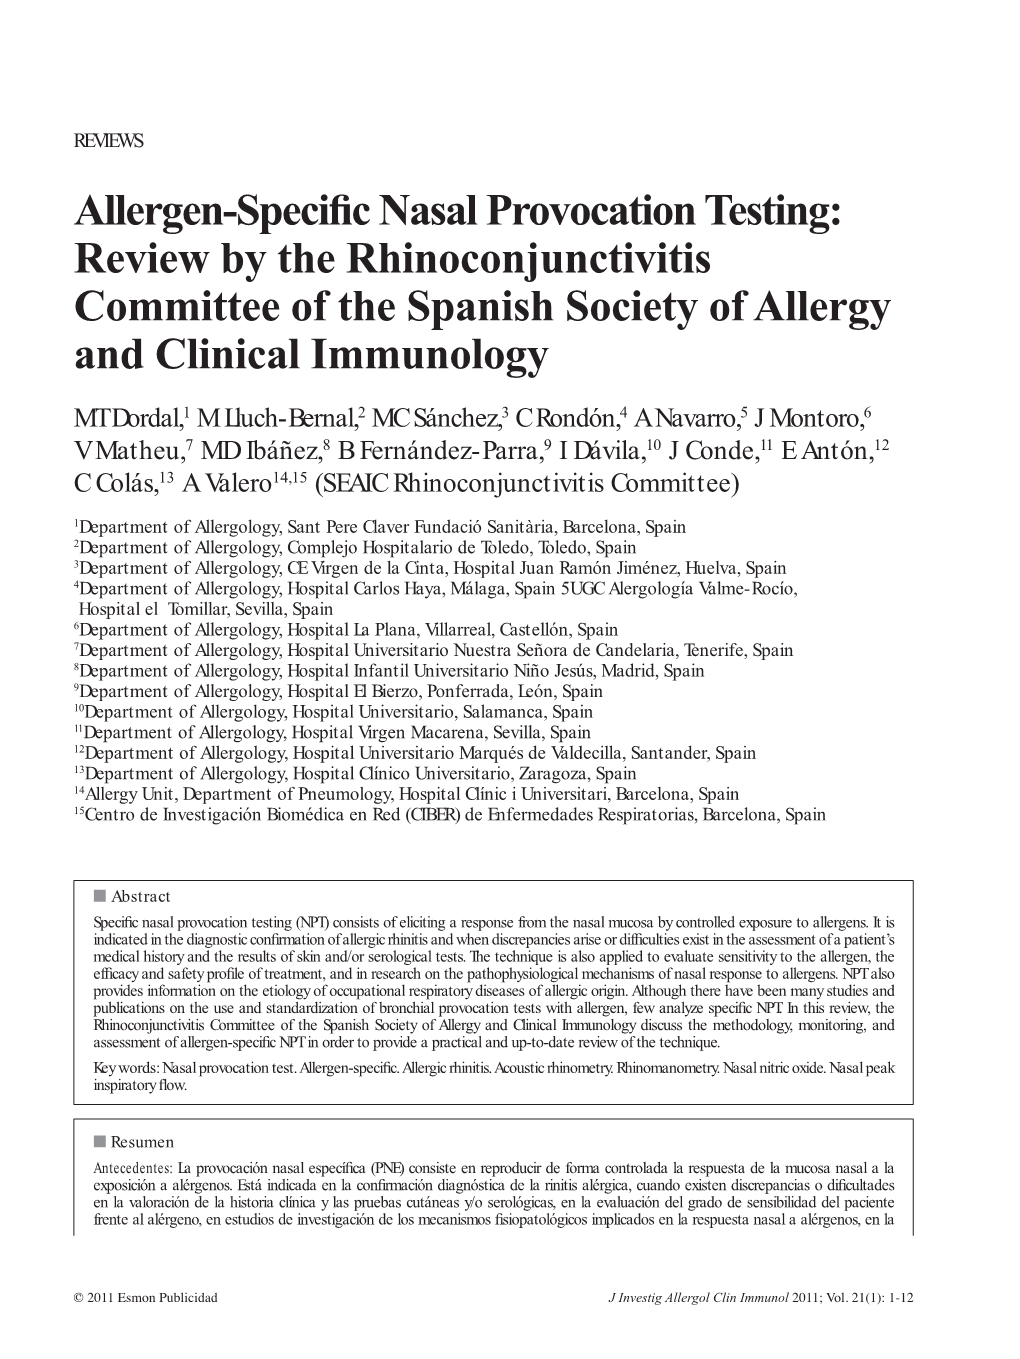 Allergen-Specific Nasal Provocation Testing